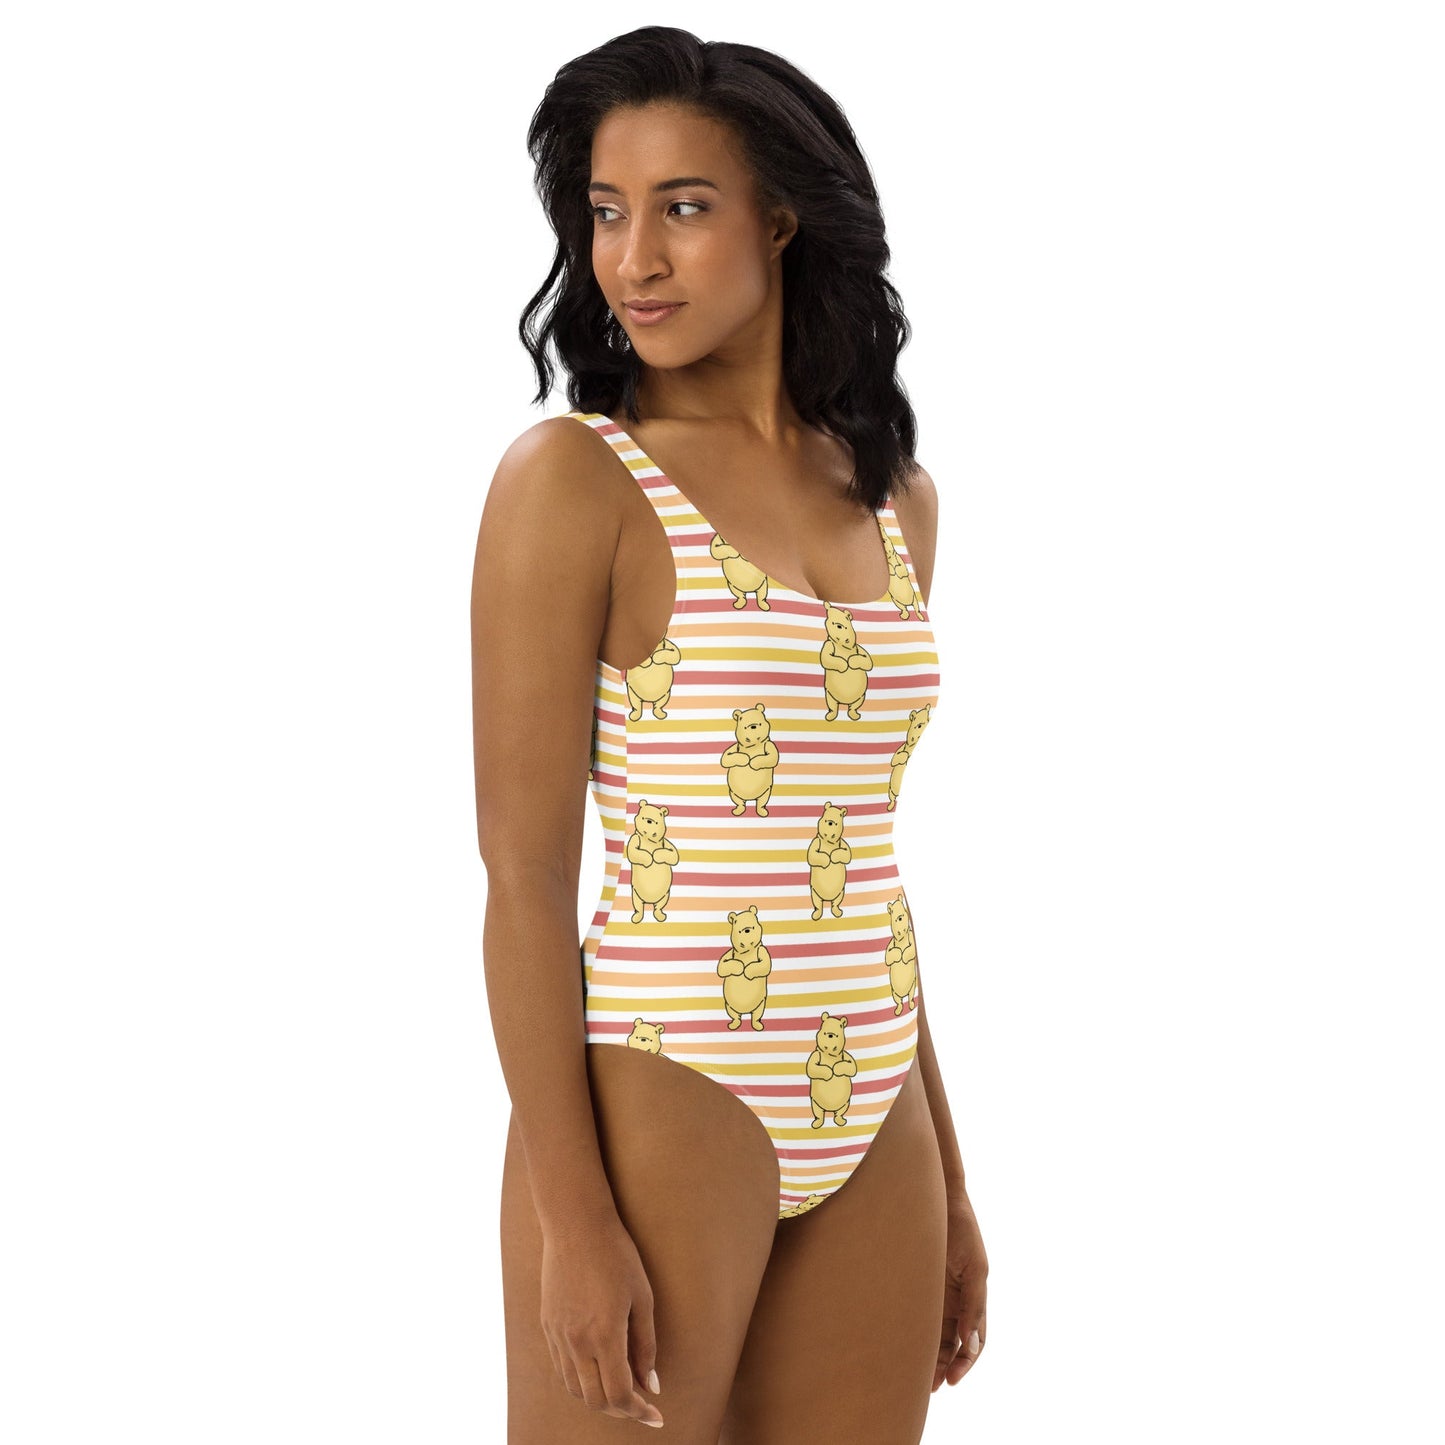 Pooh Stripes One-Piece Swimsuit adult disneyadult disney clothingWrong Lever Clothing